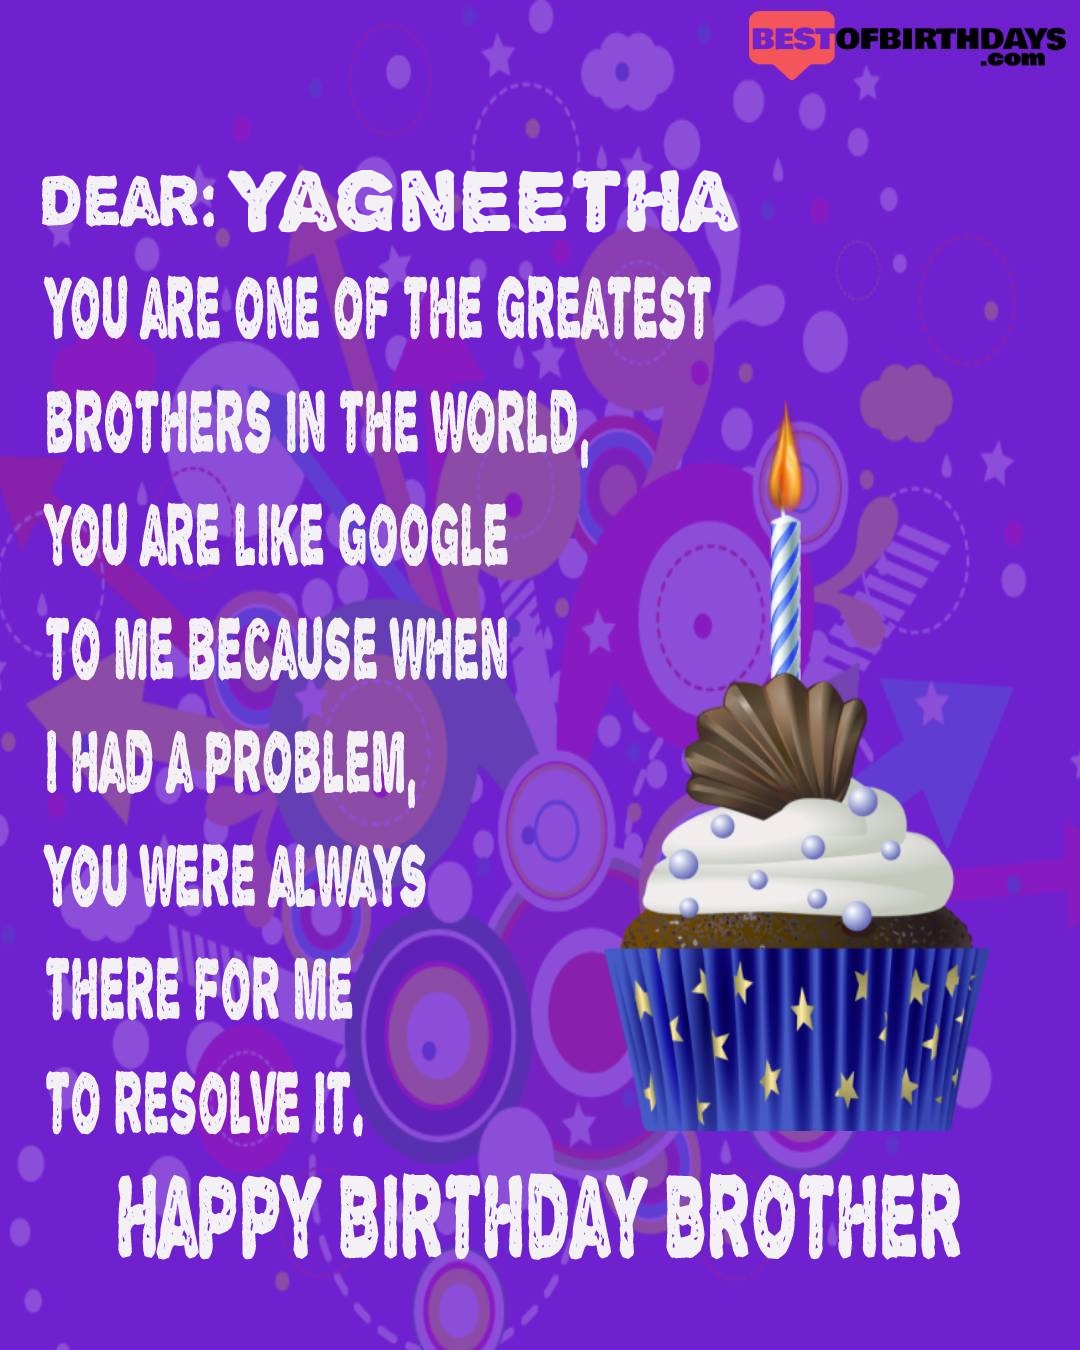 Happy birthday yagneetha bhai brother bro